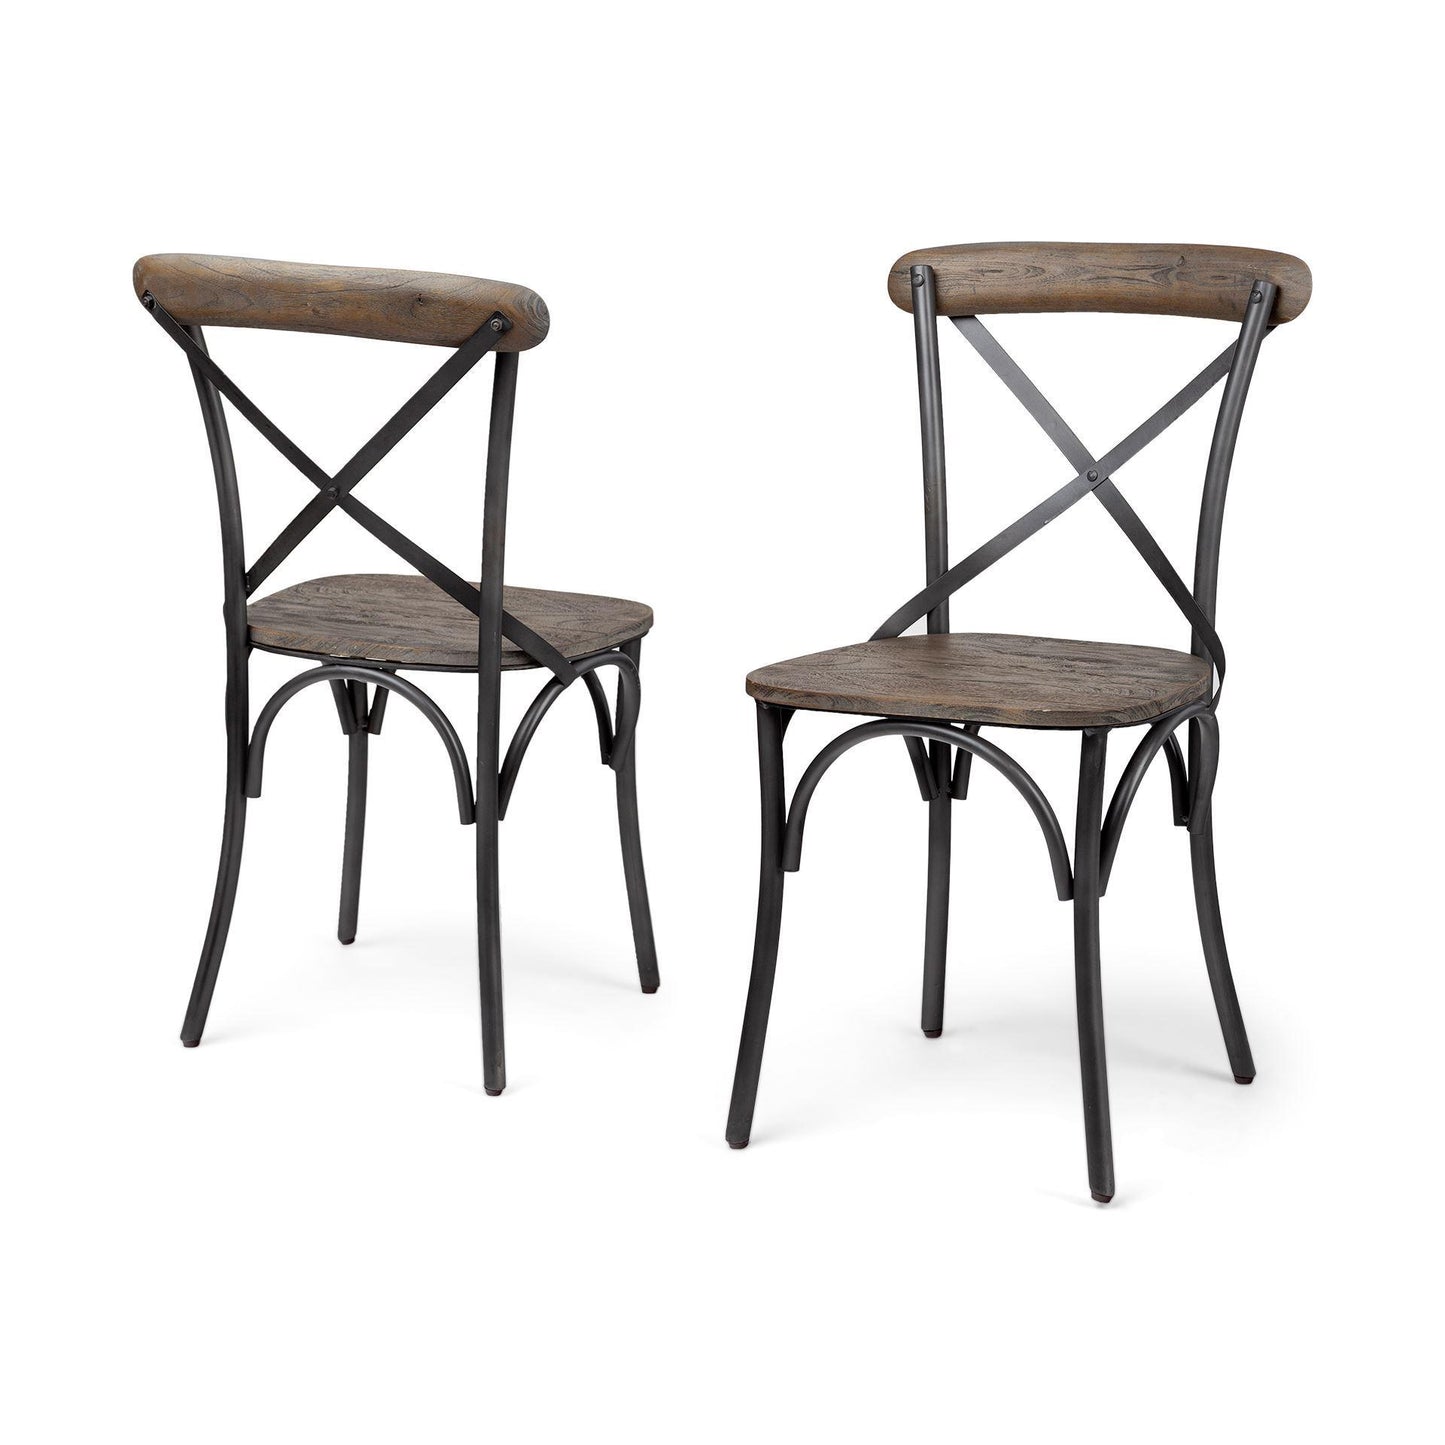 Maxton II Table - 4 Chairs